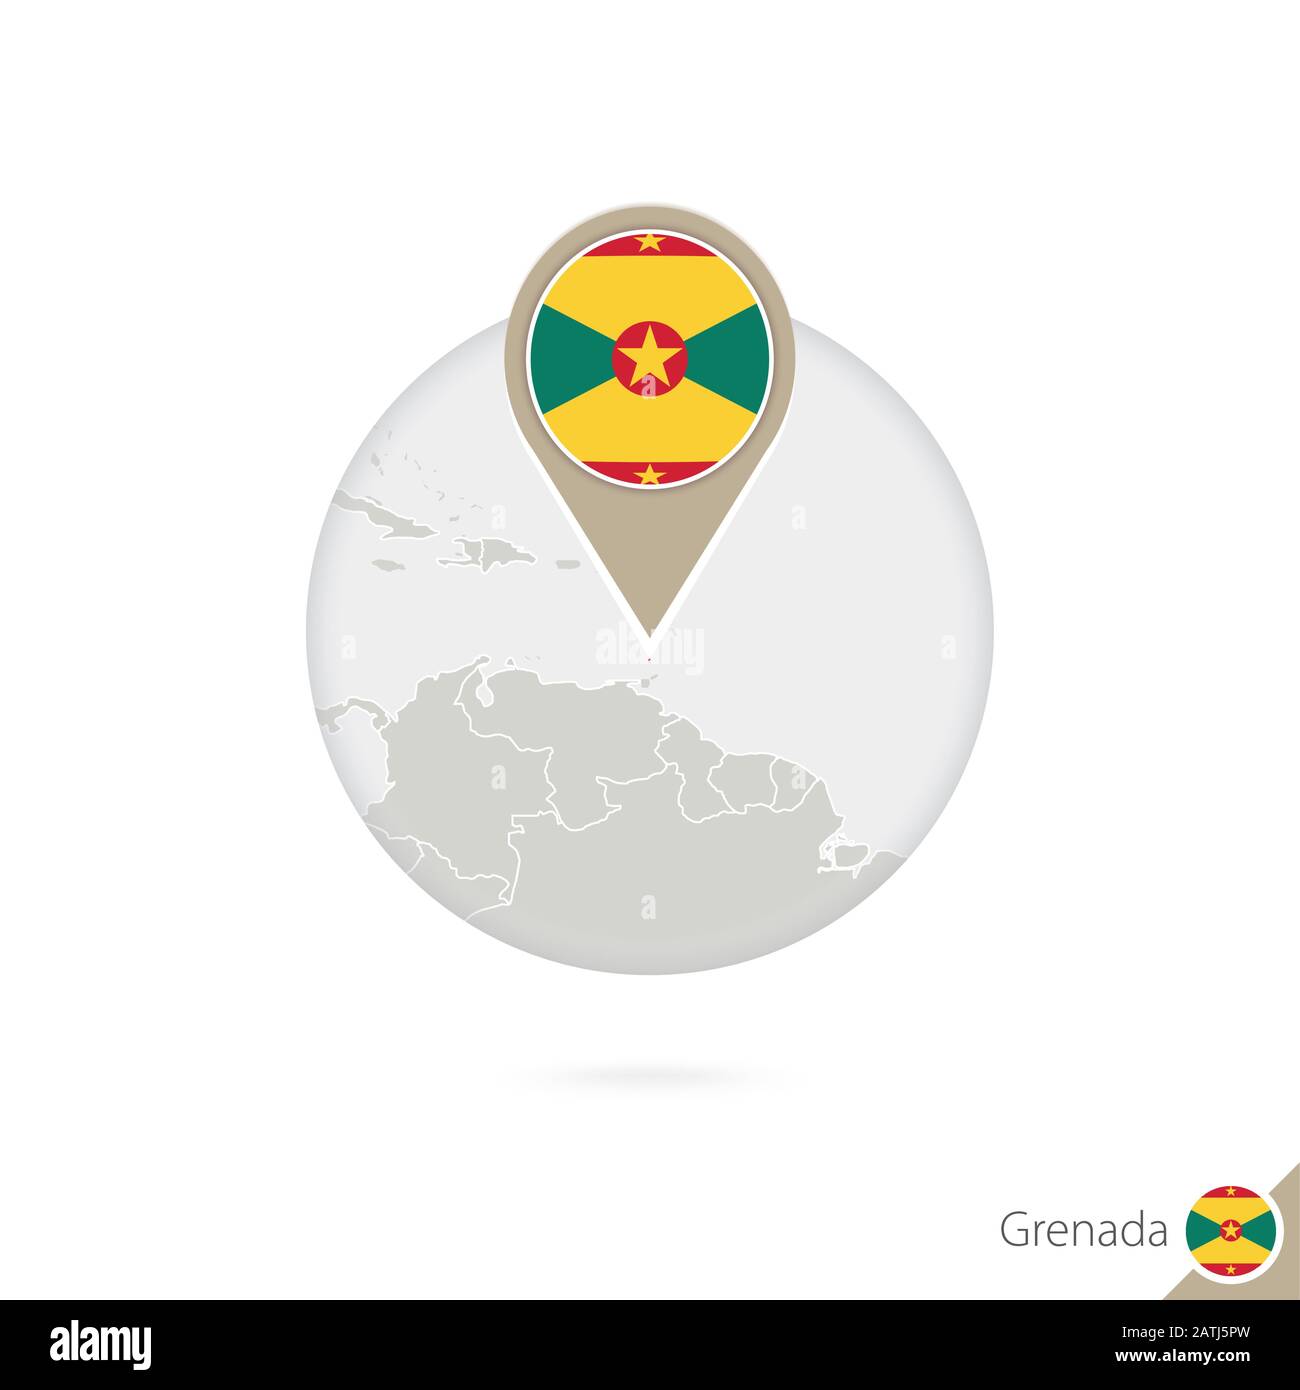 Grenada map and flag in circle. Map of Grenada, Grenada flag pin. Map of Grenada in the style of the globe. Vector Illustration. Stock Vector